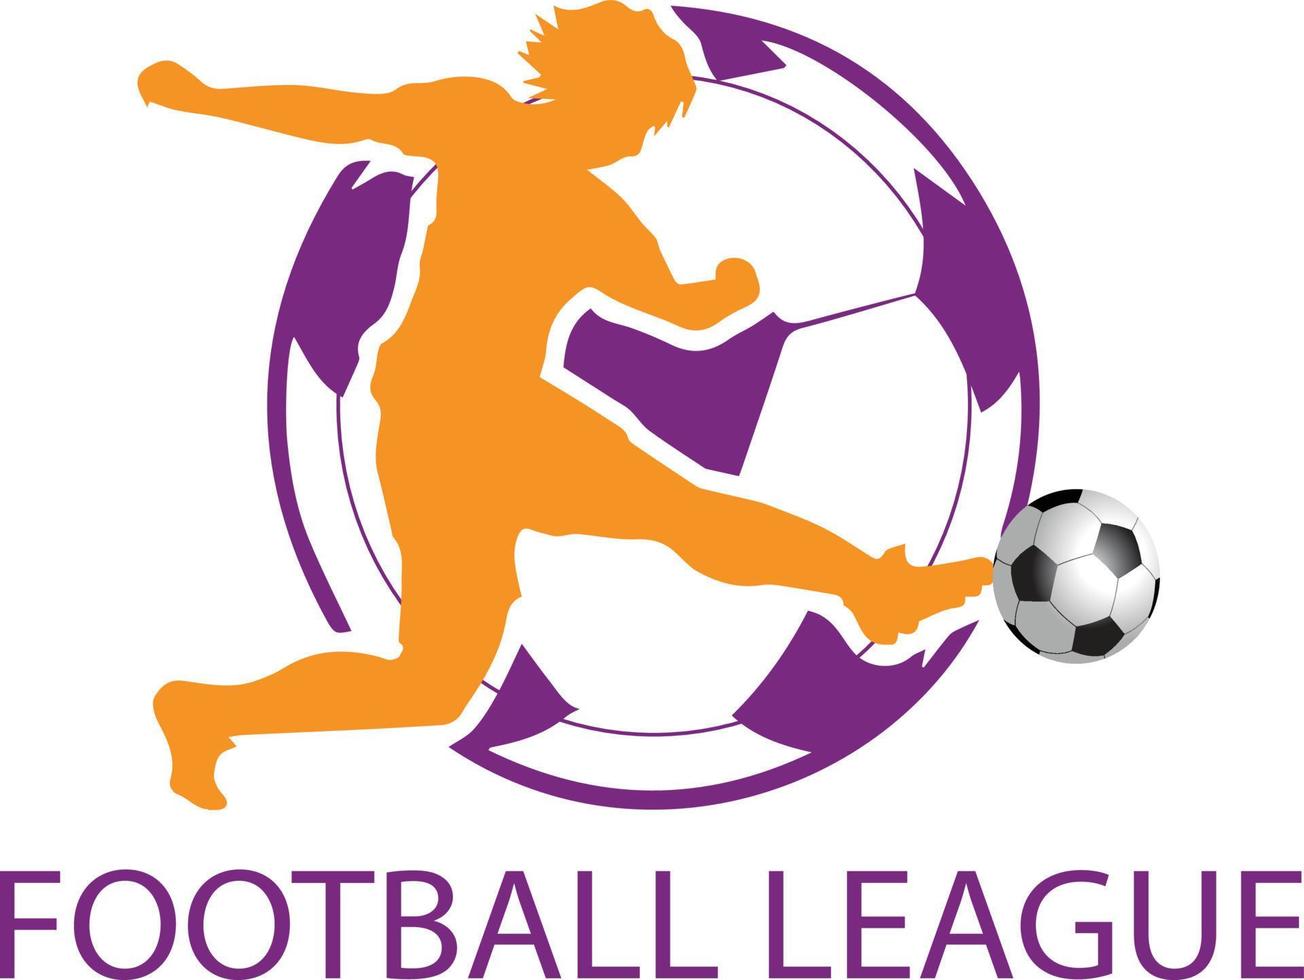 football and soccer logo, player man vector